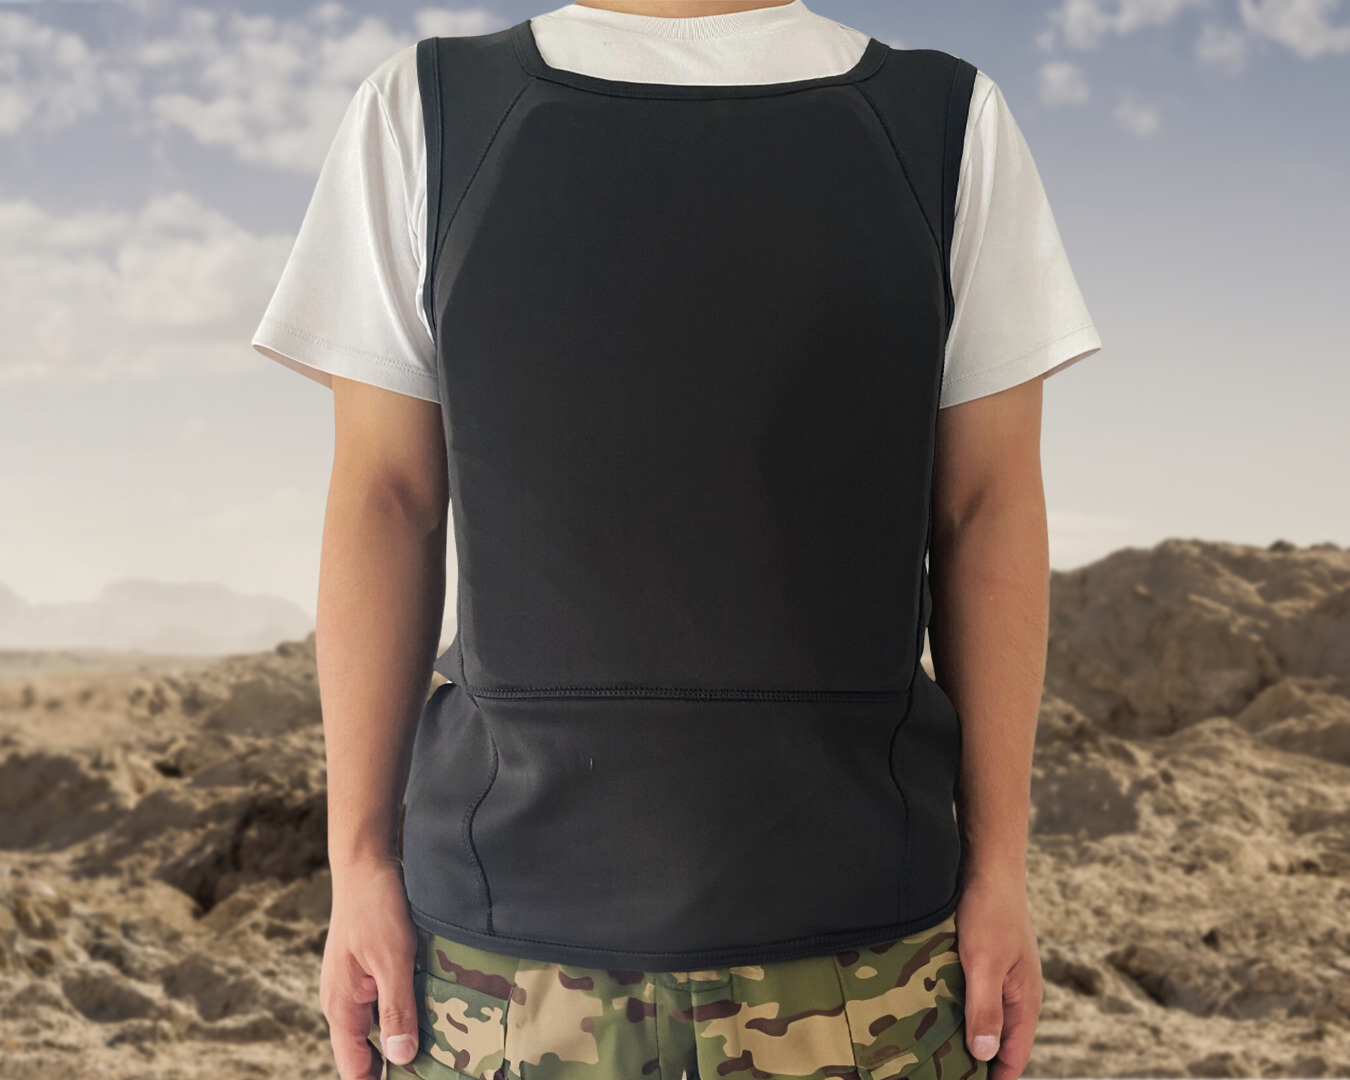 Level-4 Armor Level IIIA Bulletproof T-shirt's versatility and comfort